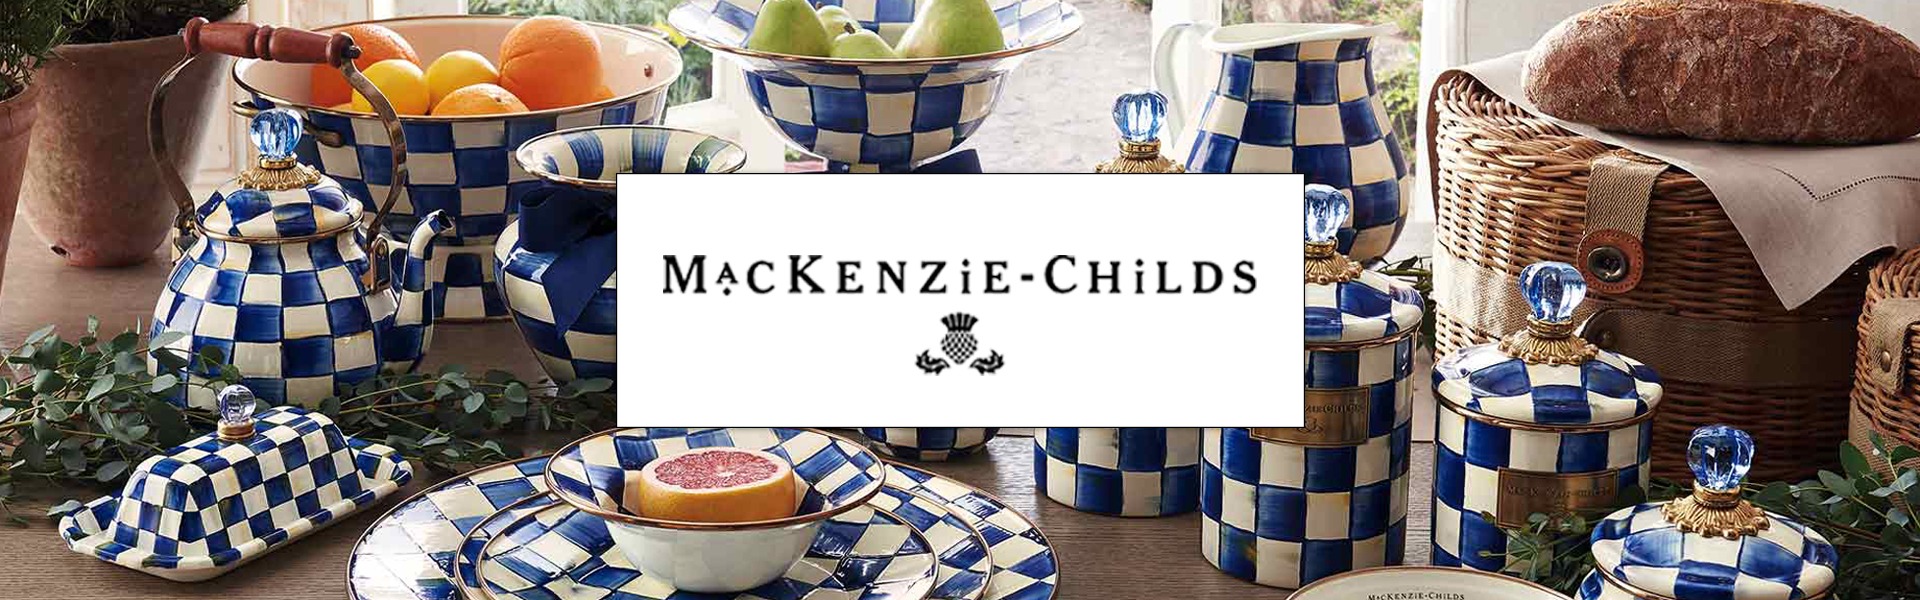 MacKenzie-Childs Tasarımları